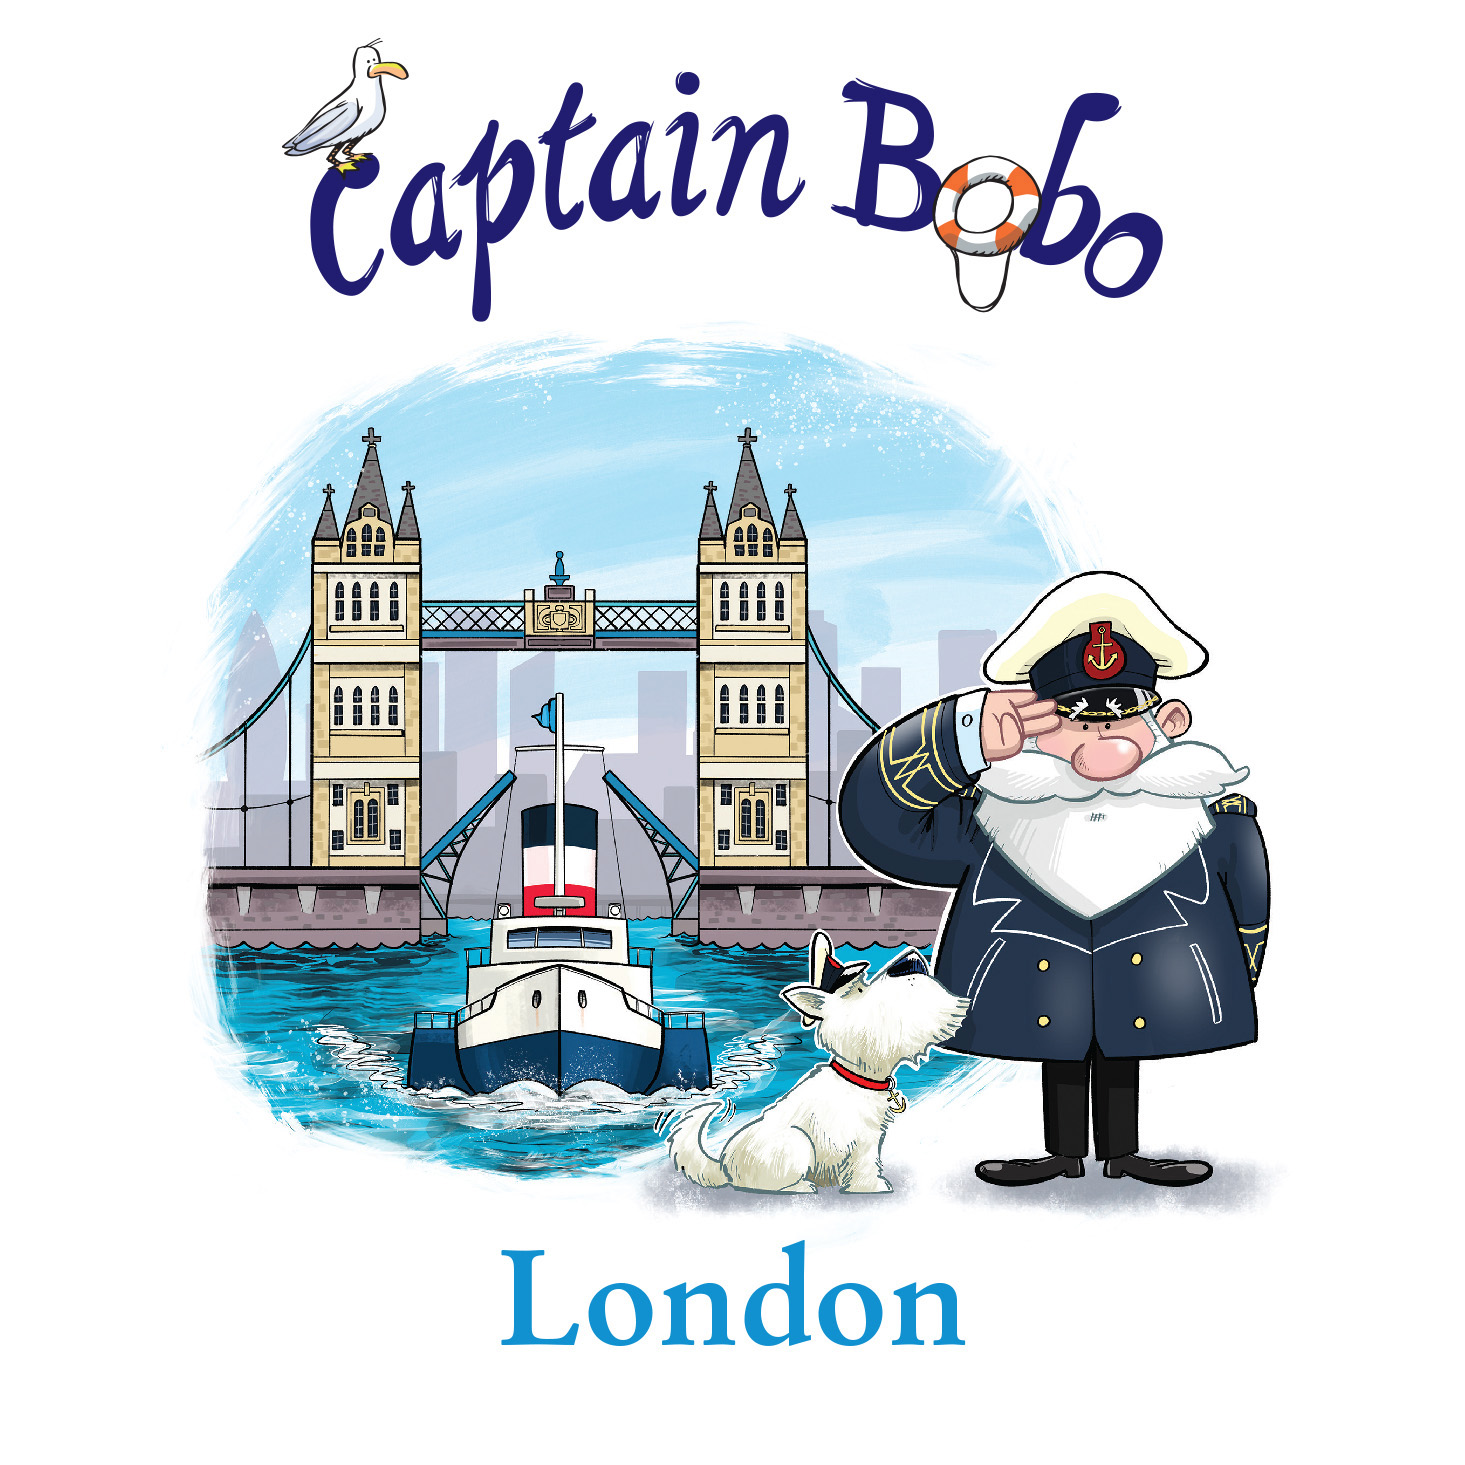 London (The Adventures of Captain Bobo)